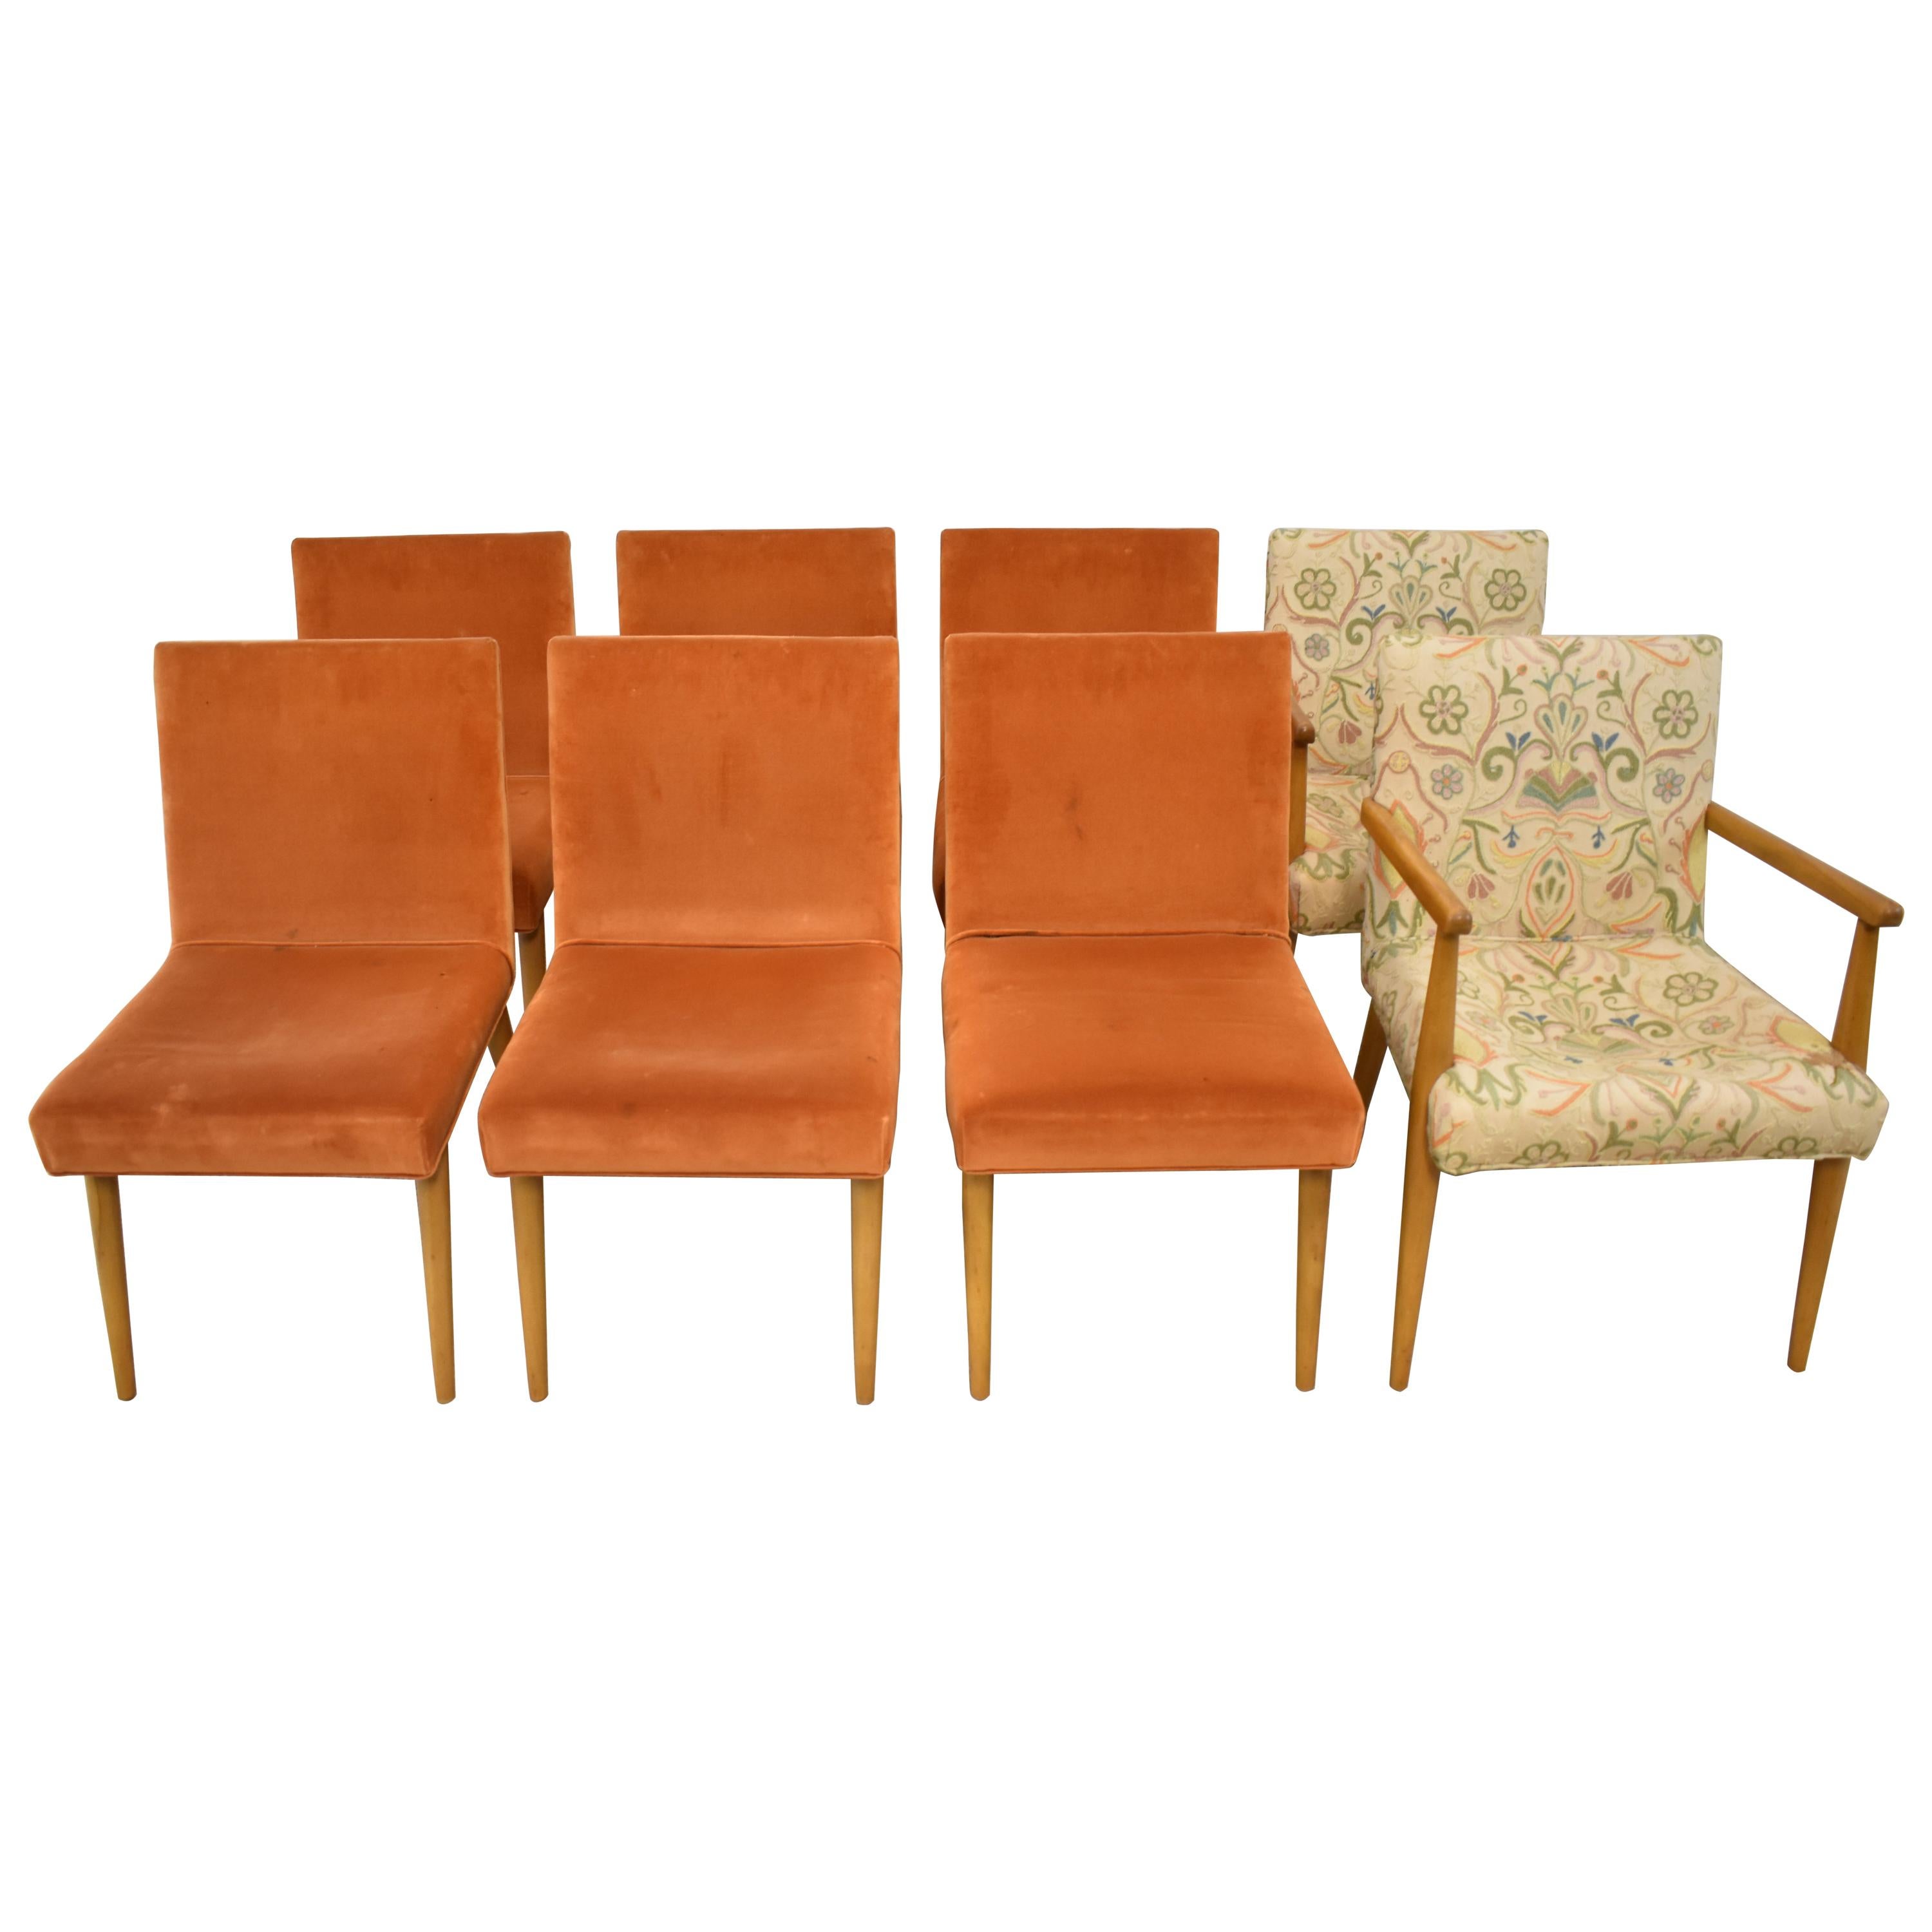 Huit chaises modernes à cadre en teck Widdicomb de T. H. Robsjohn & Gibbings en vente